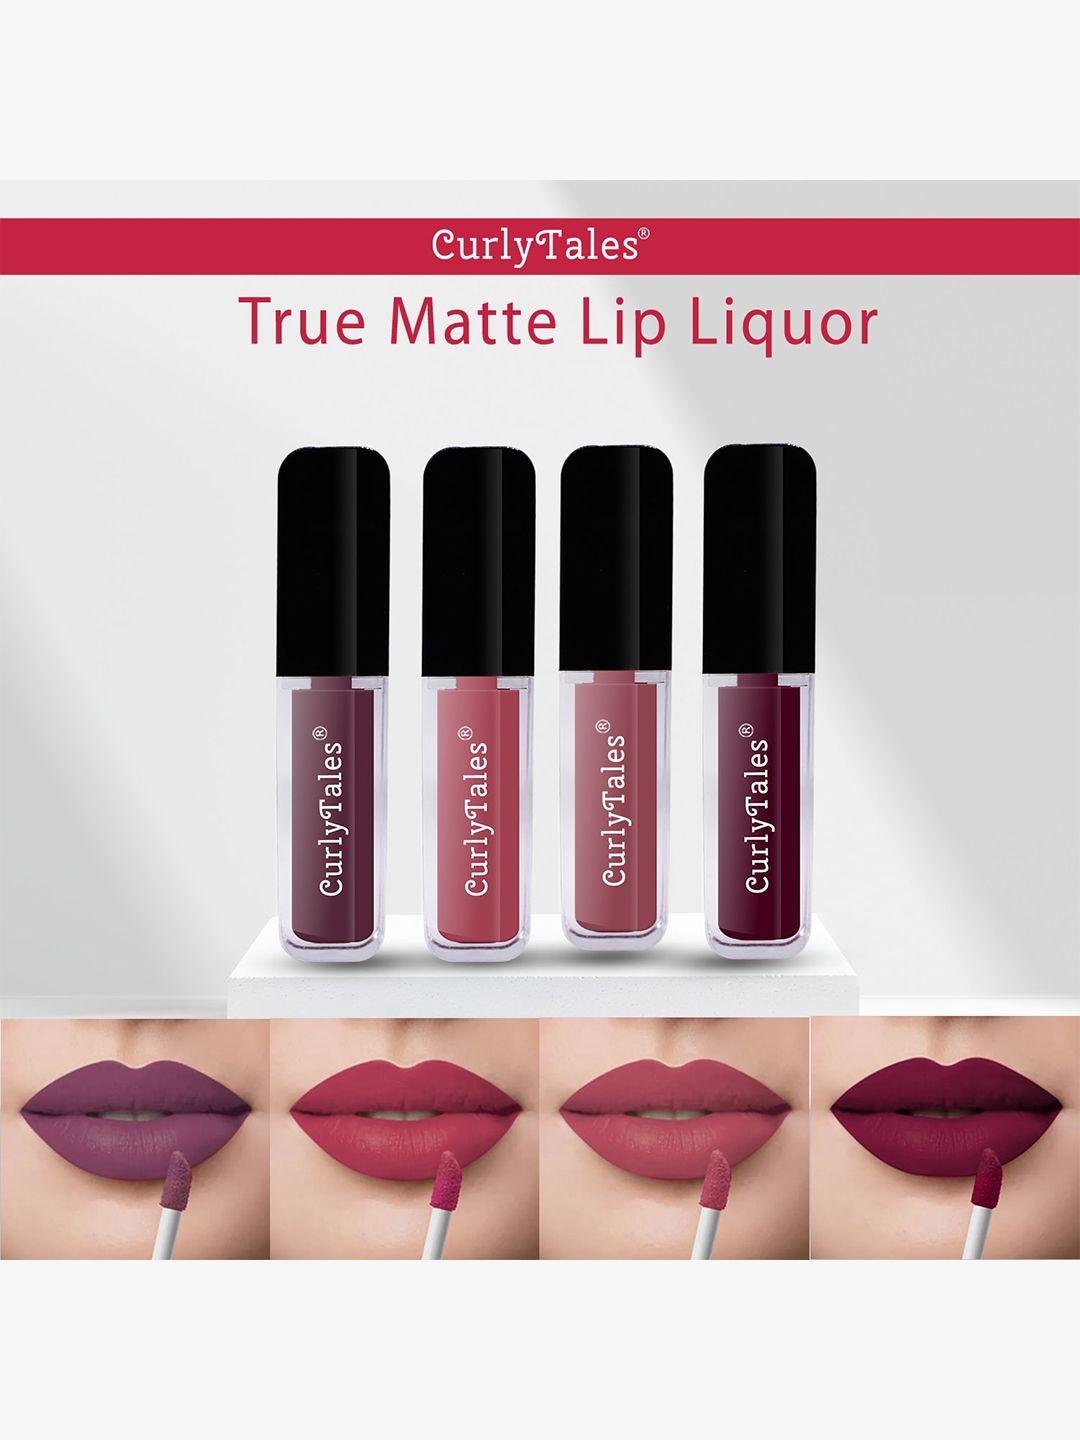 curlytales set of 4 light-on true silky matte long-lasting liquid lipsticks 12ml each